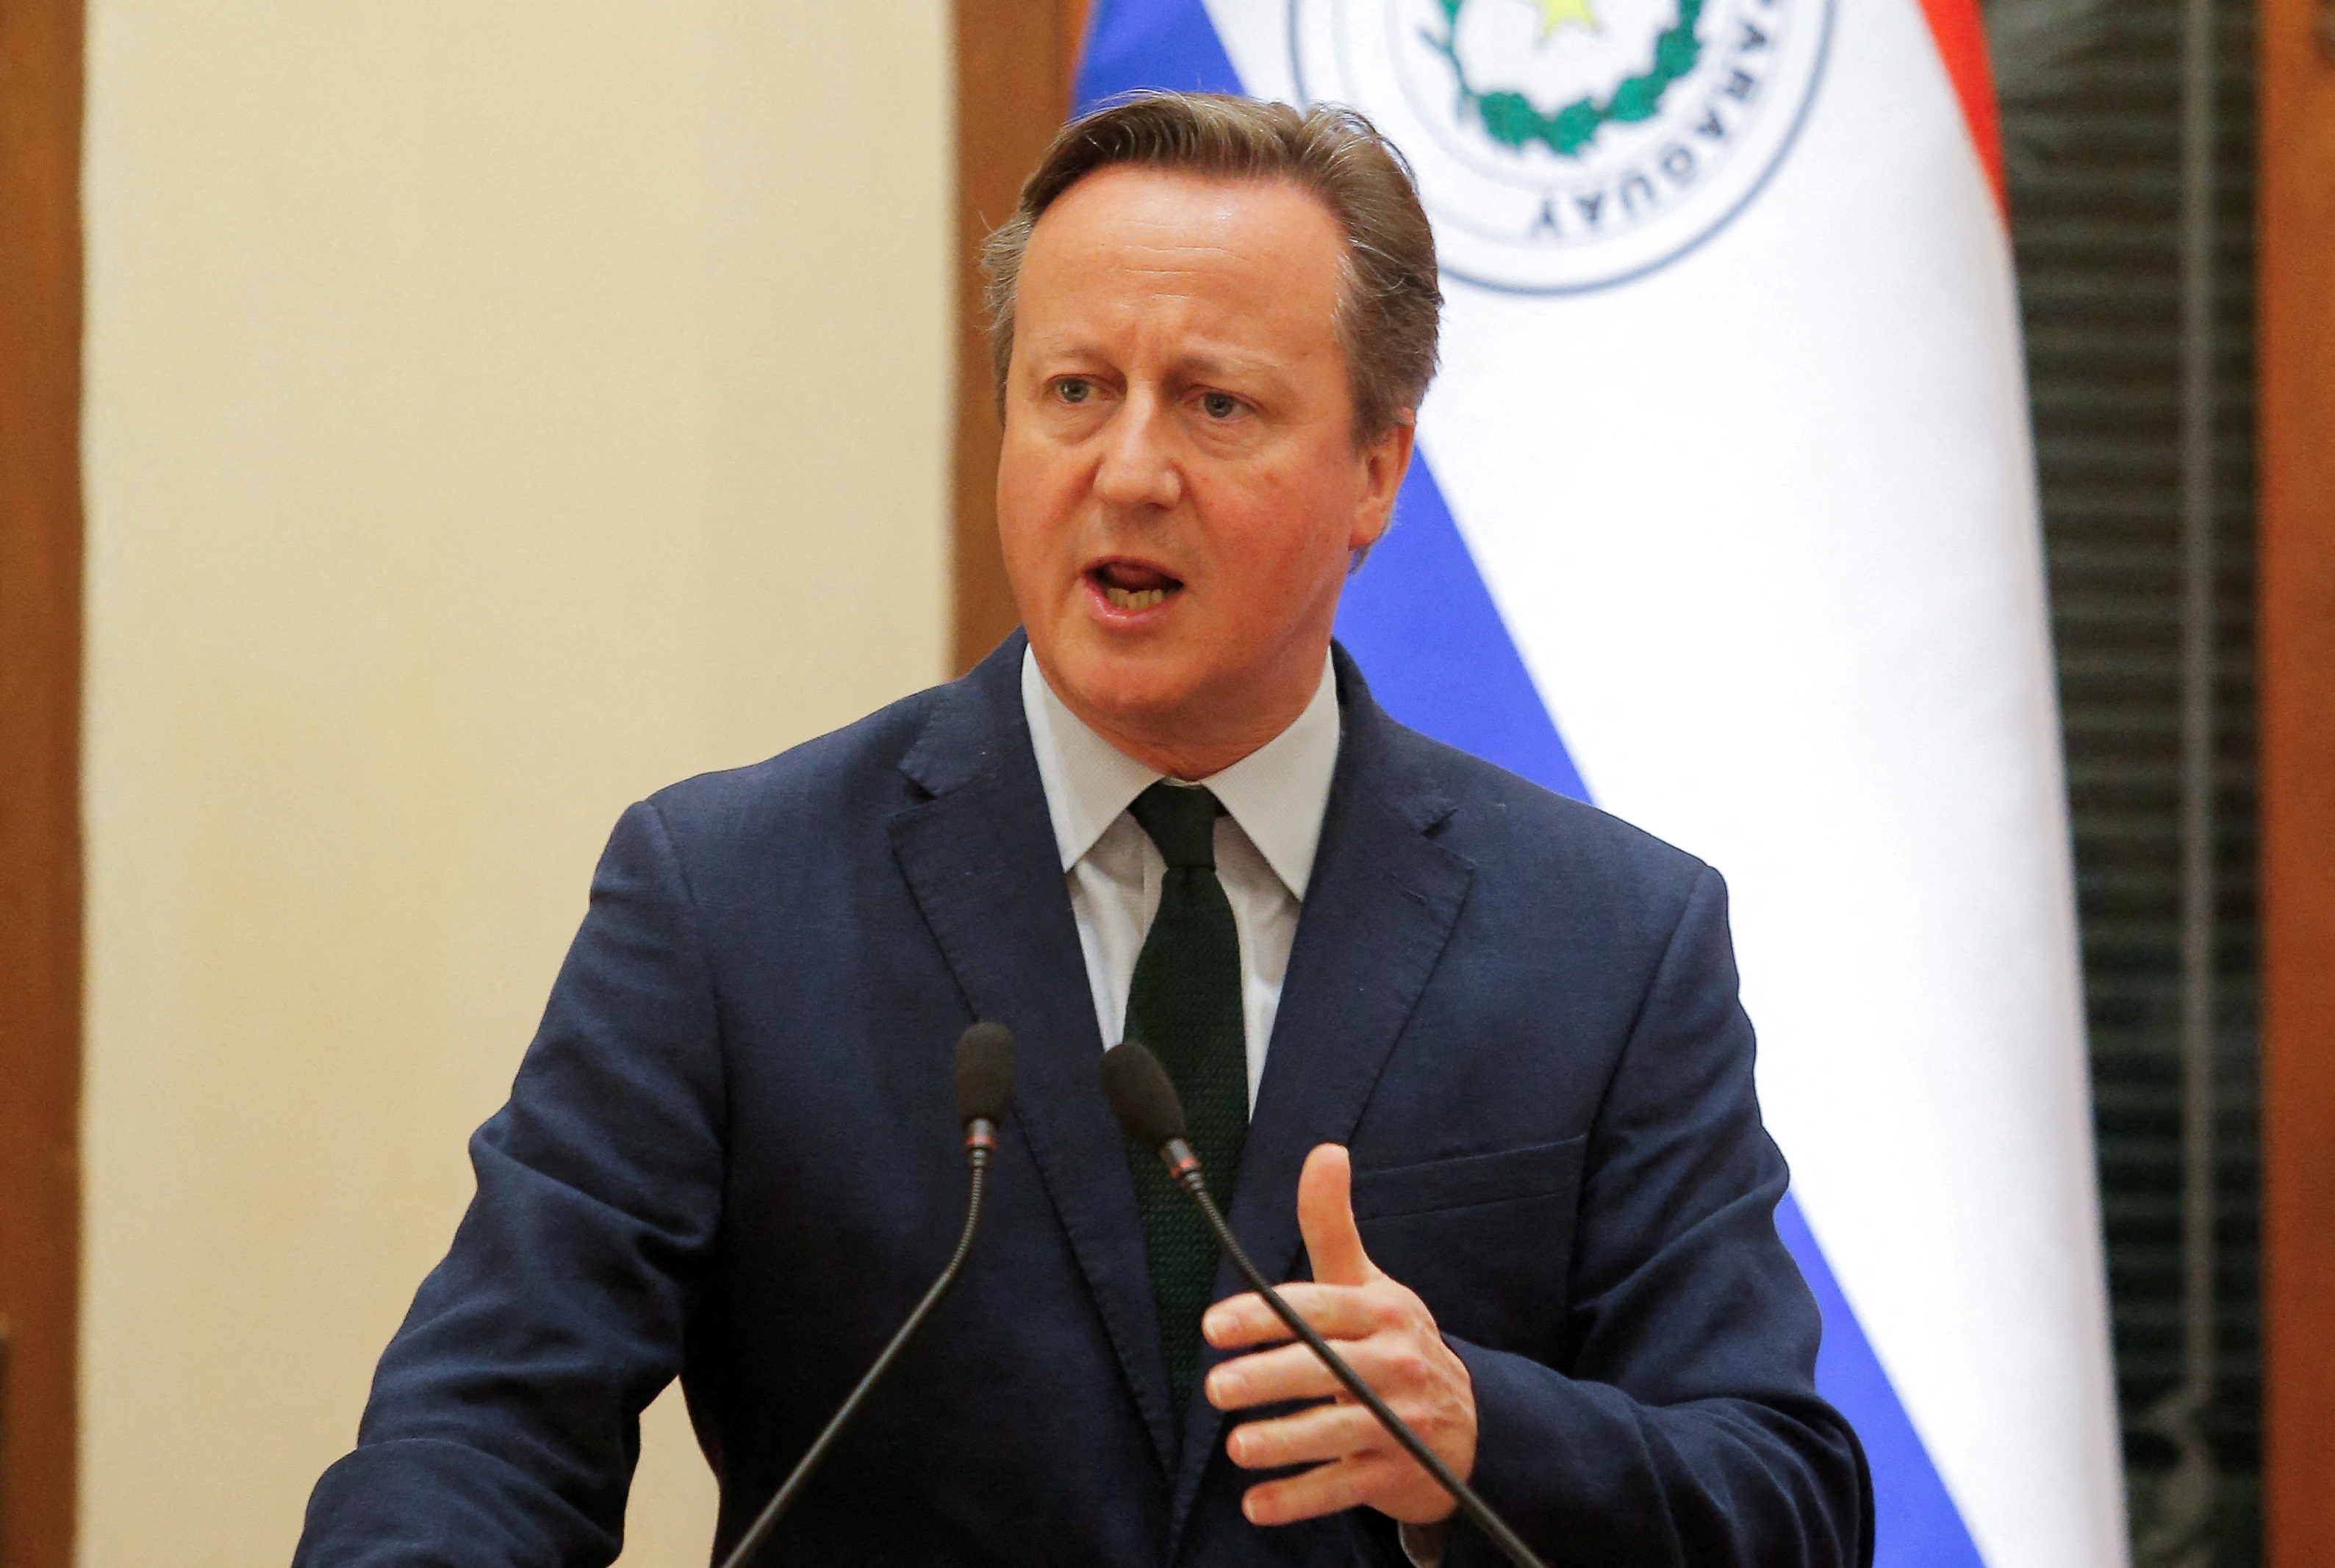 David Cameron has urged Nato allies to commit more funding towards Ukraine